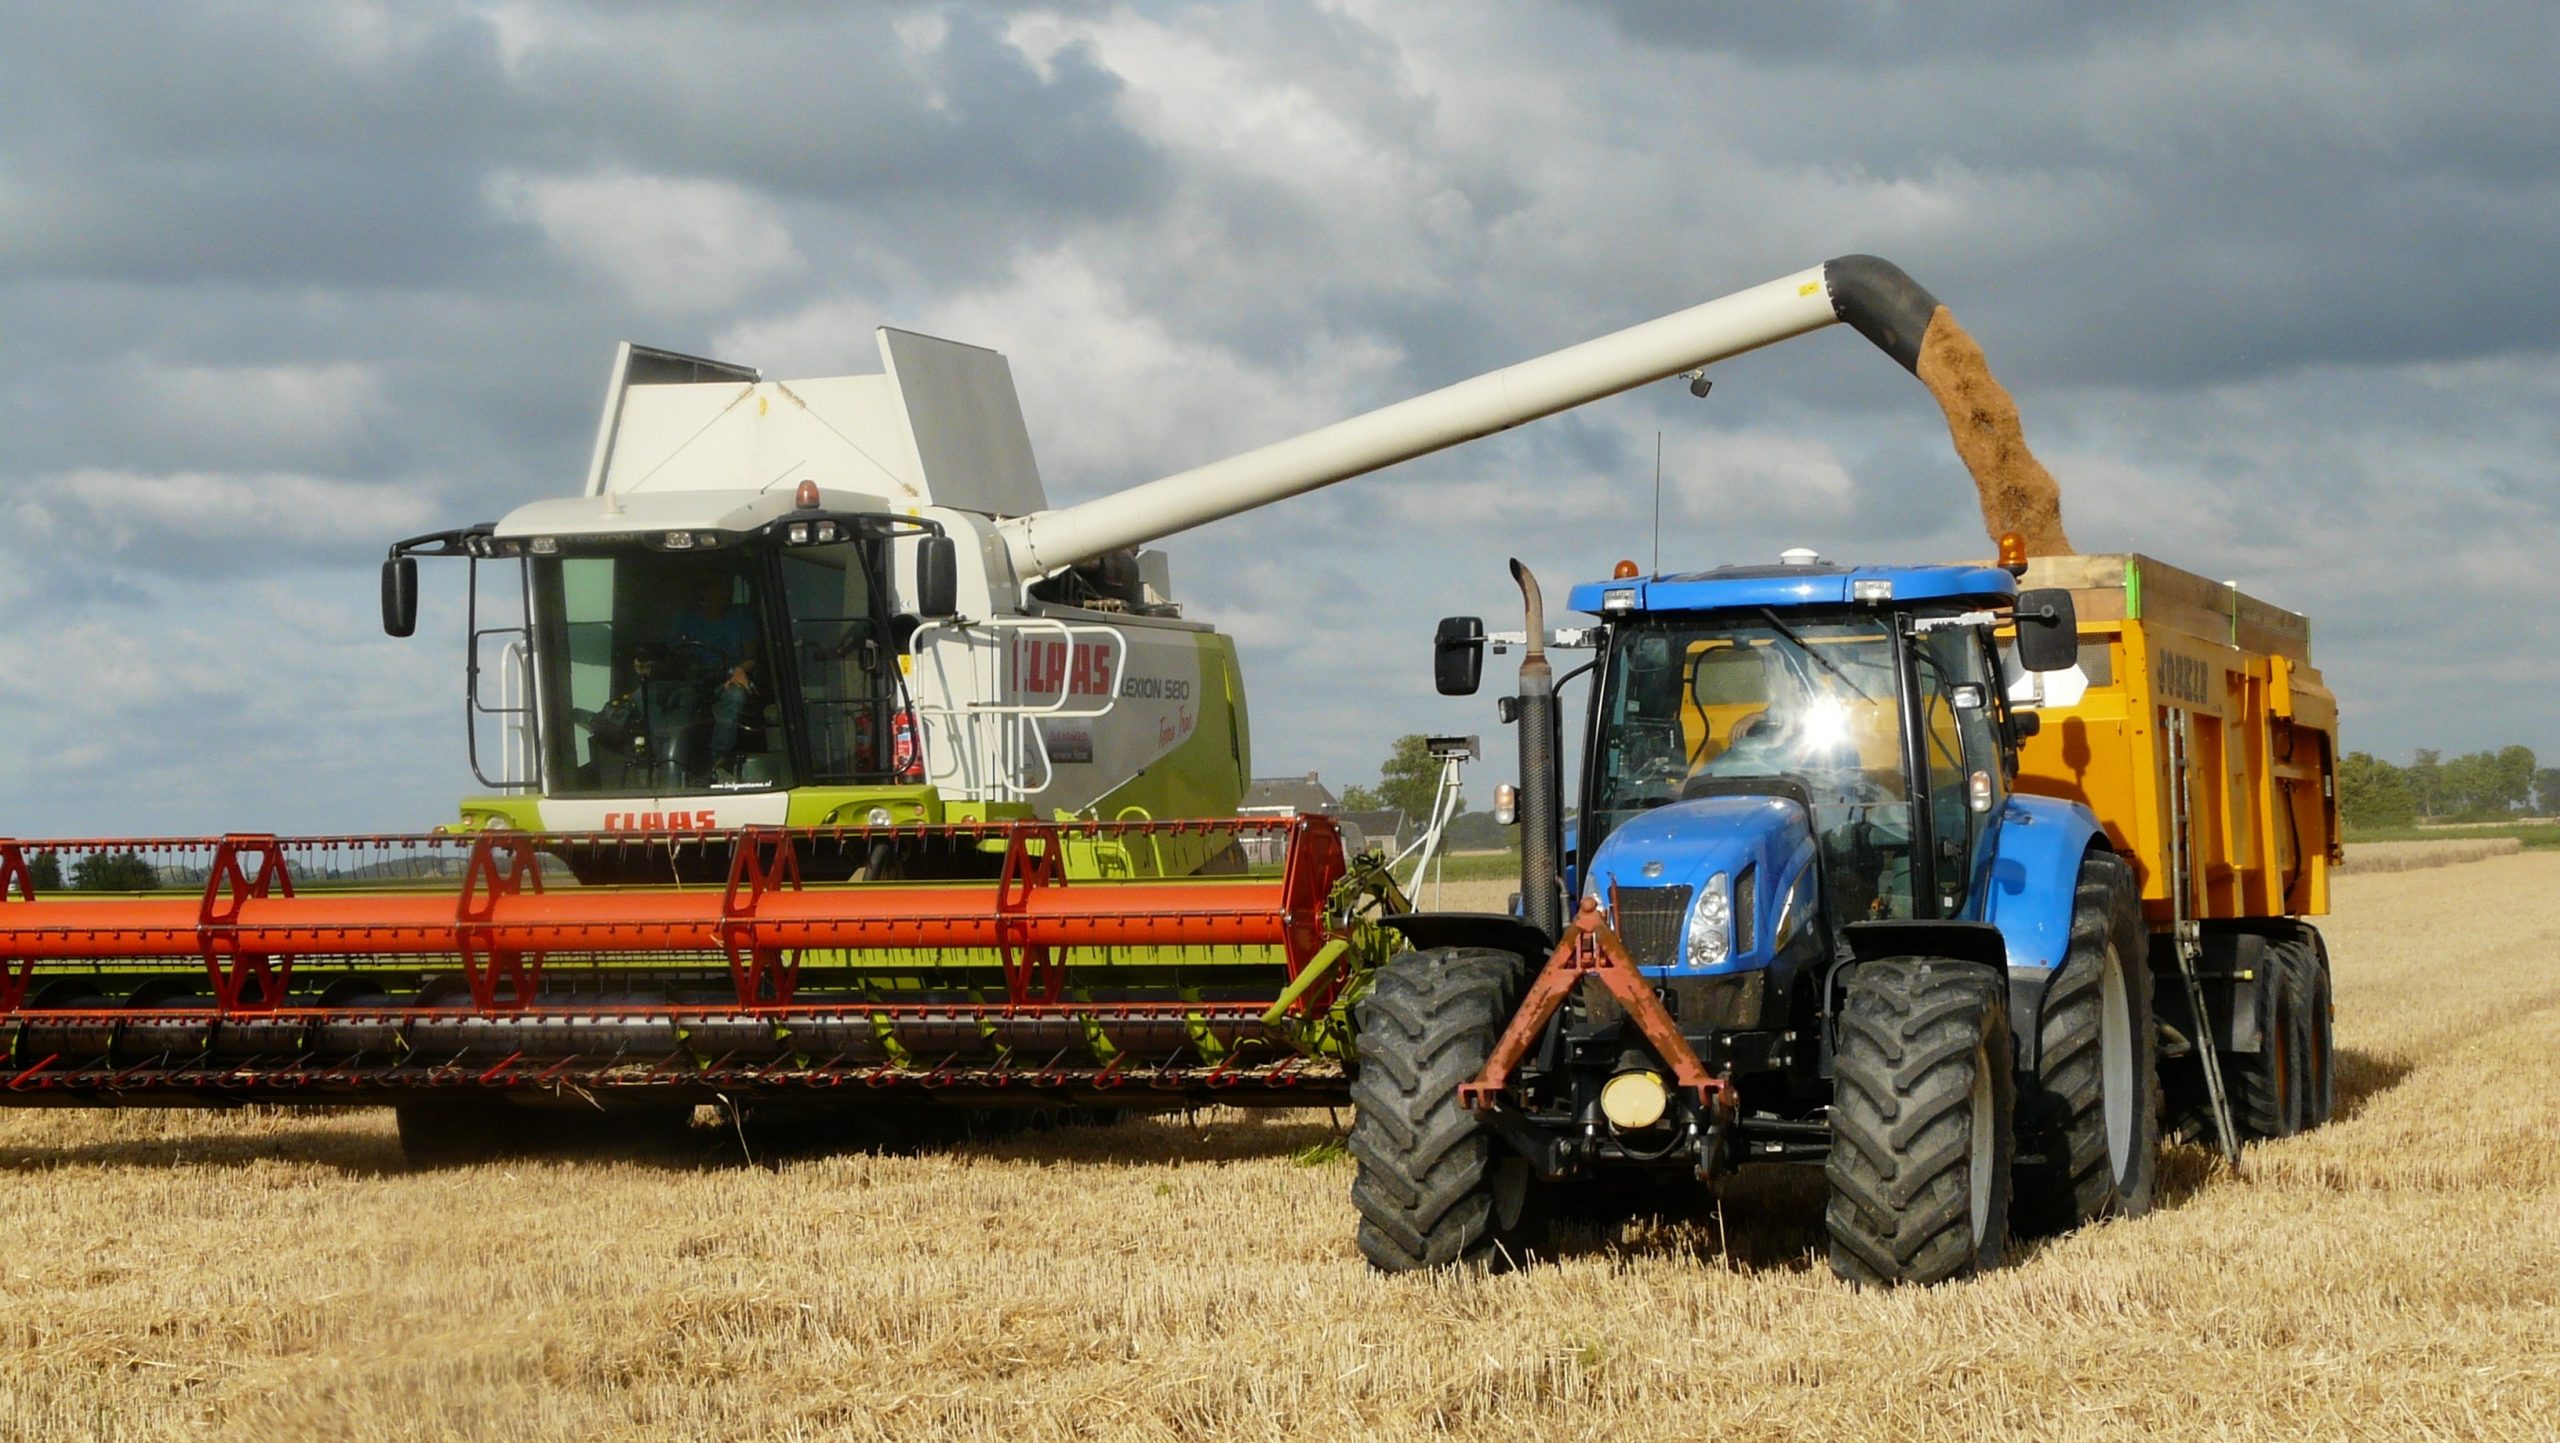 Minister: Ban on Ukrainian Grain Should Be Extended